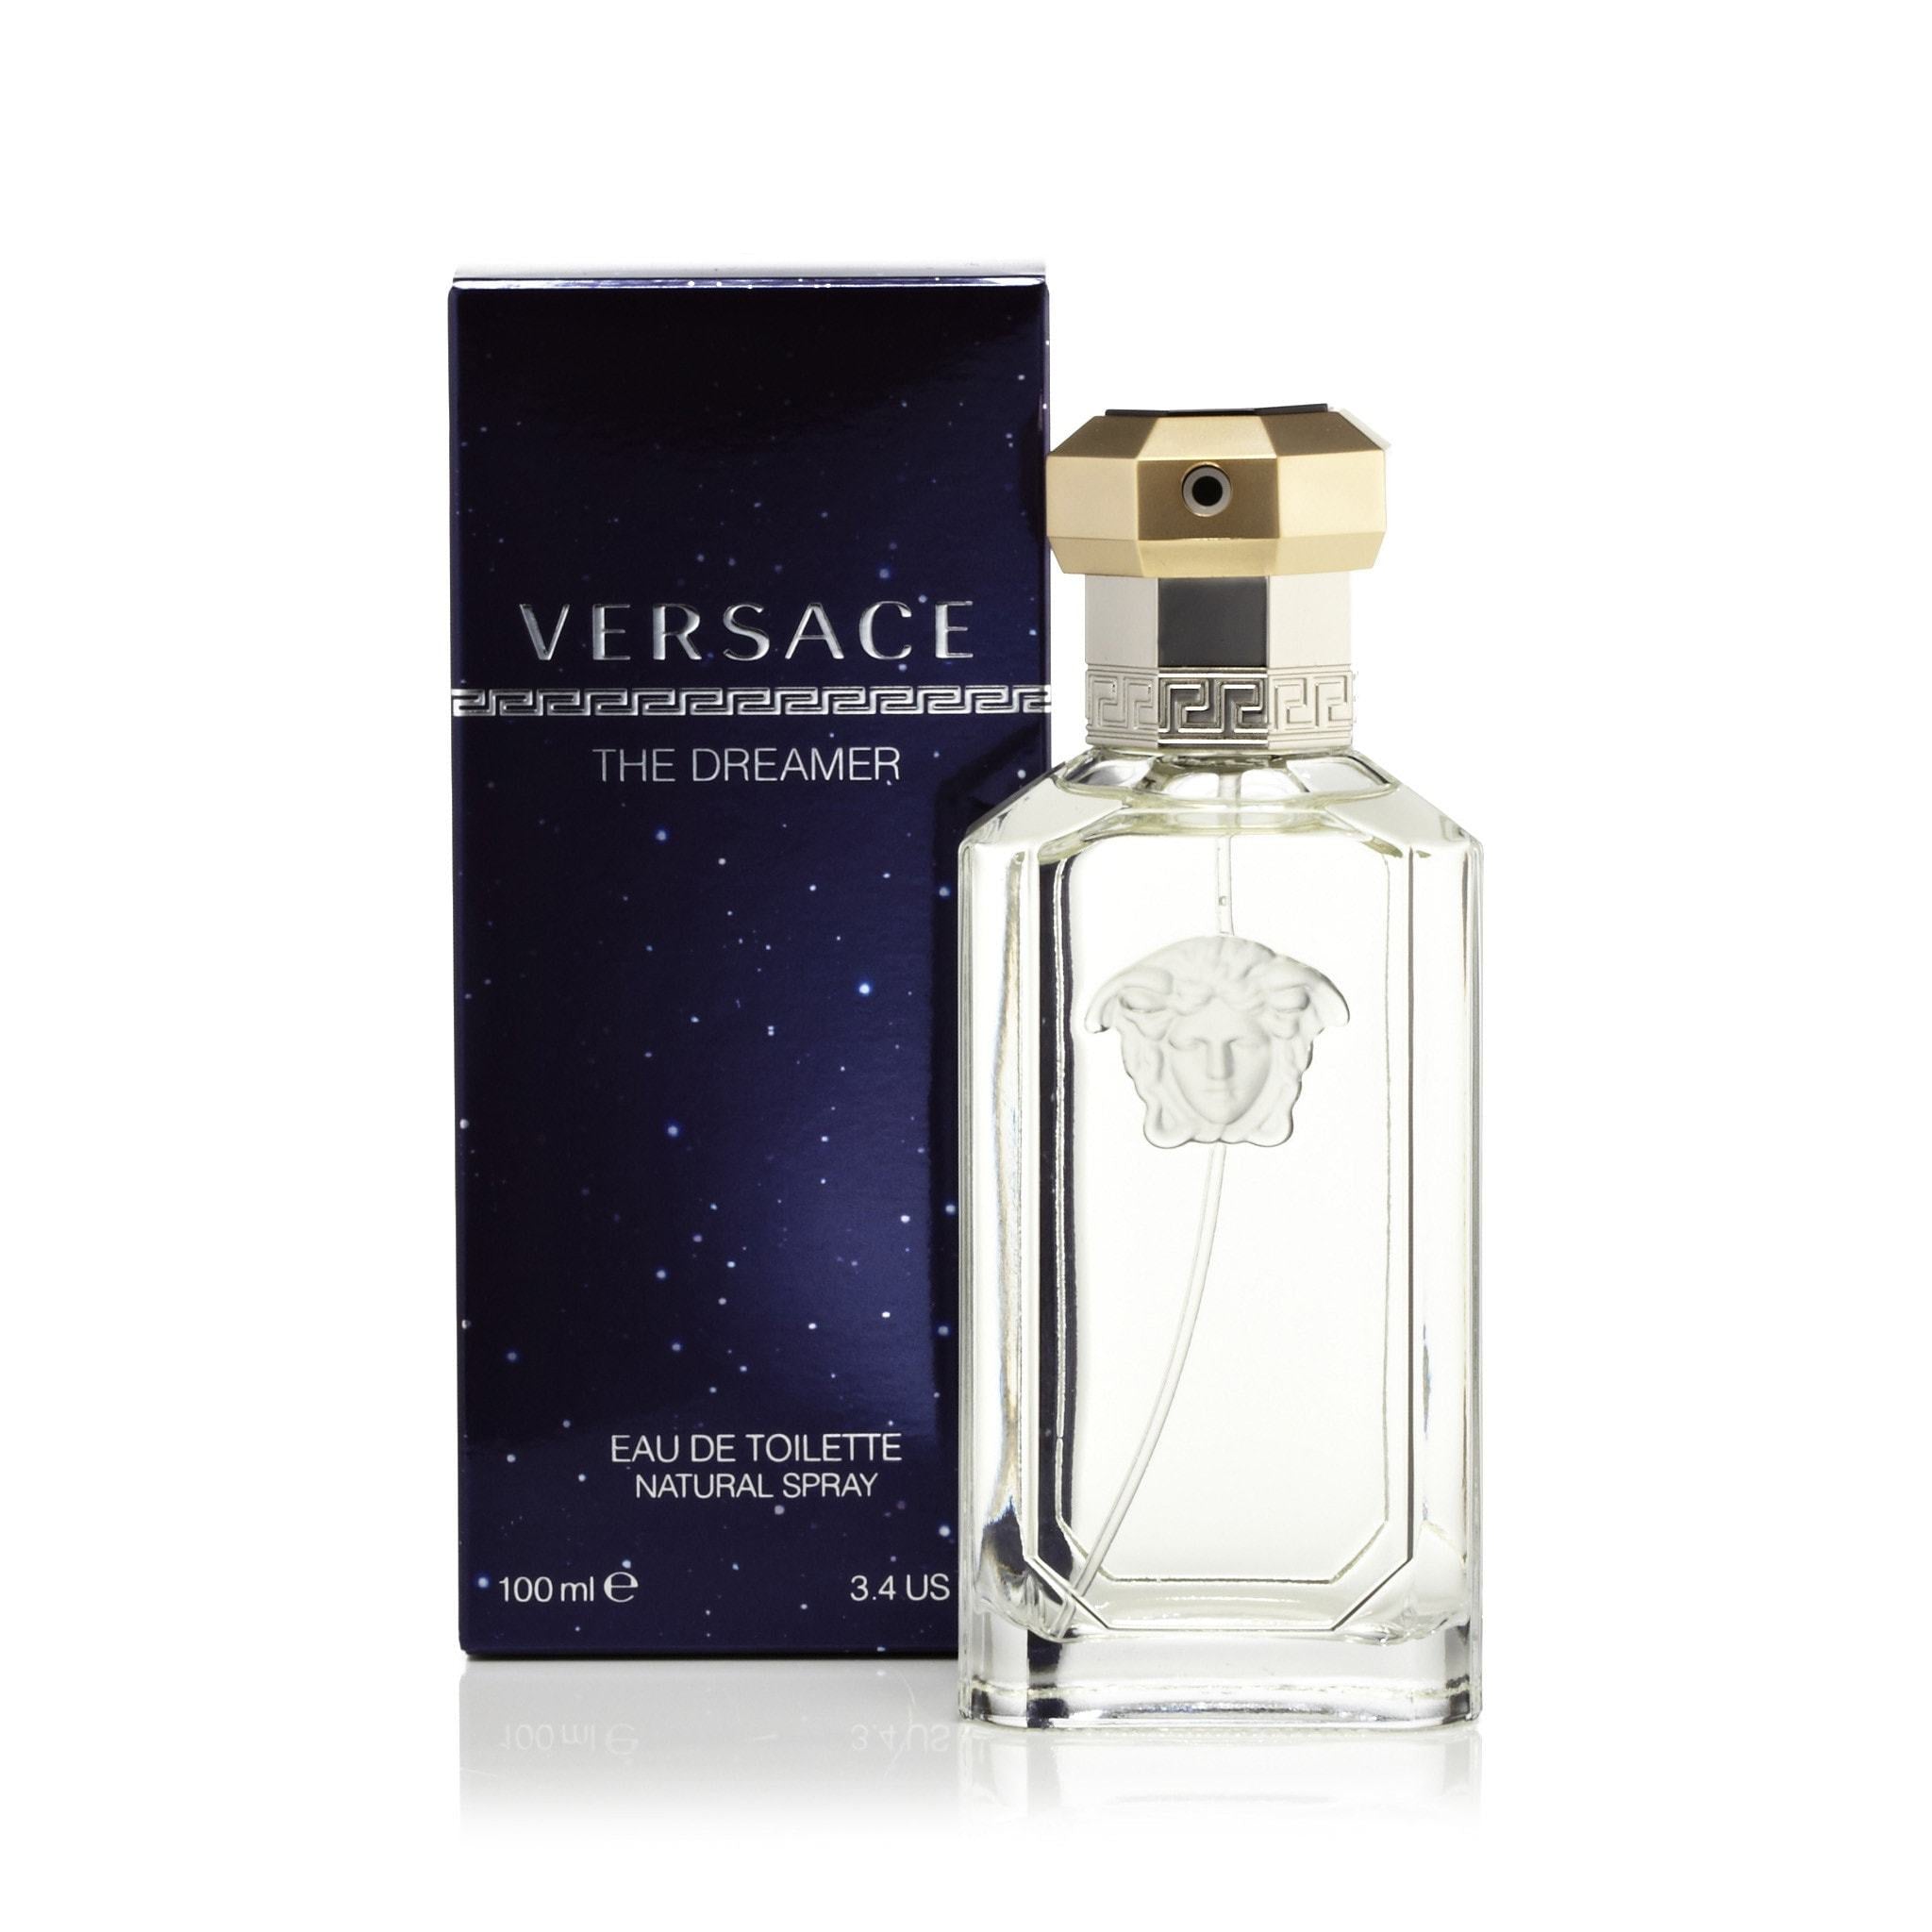 versace dreamer perfume price